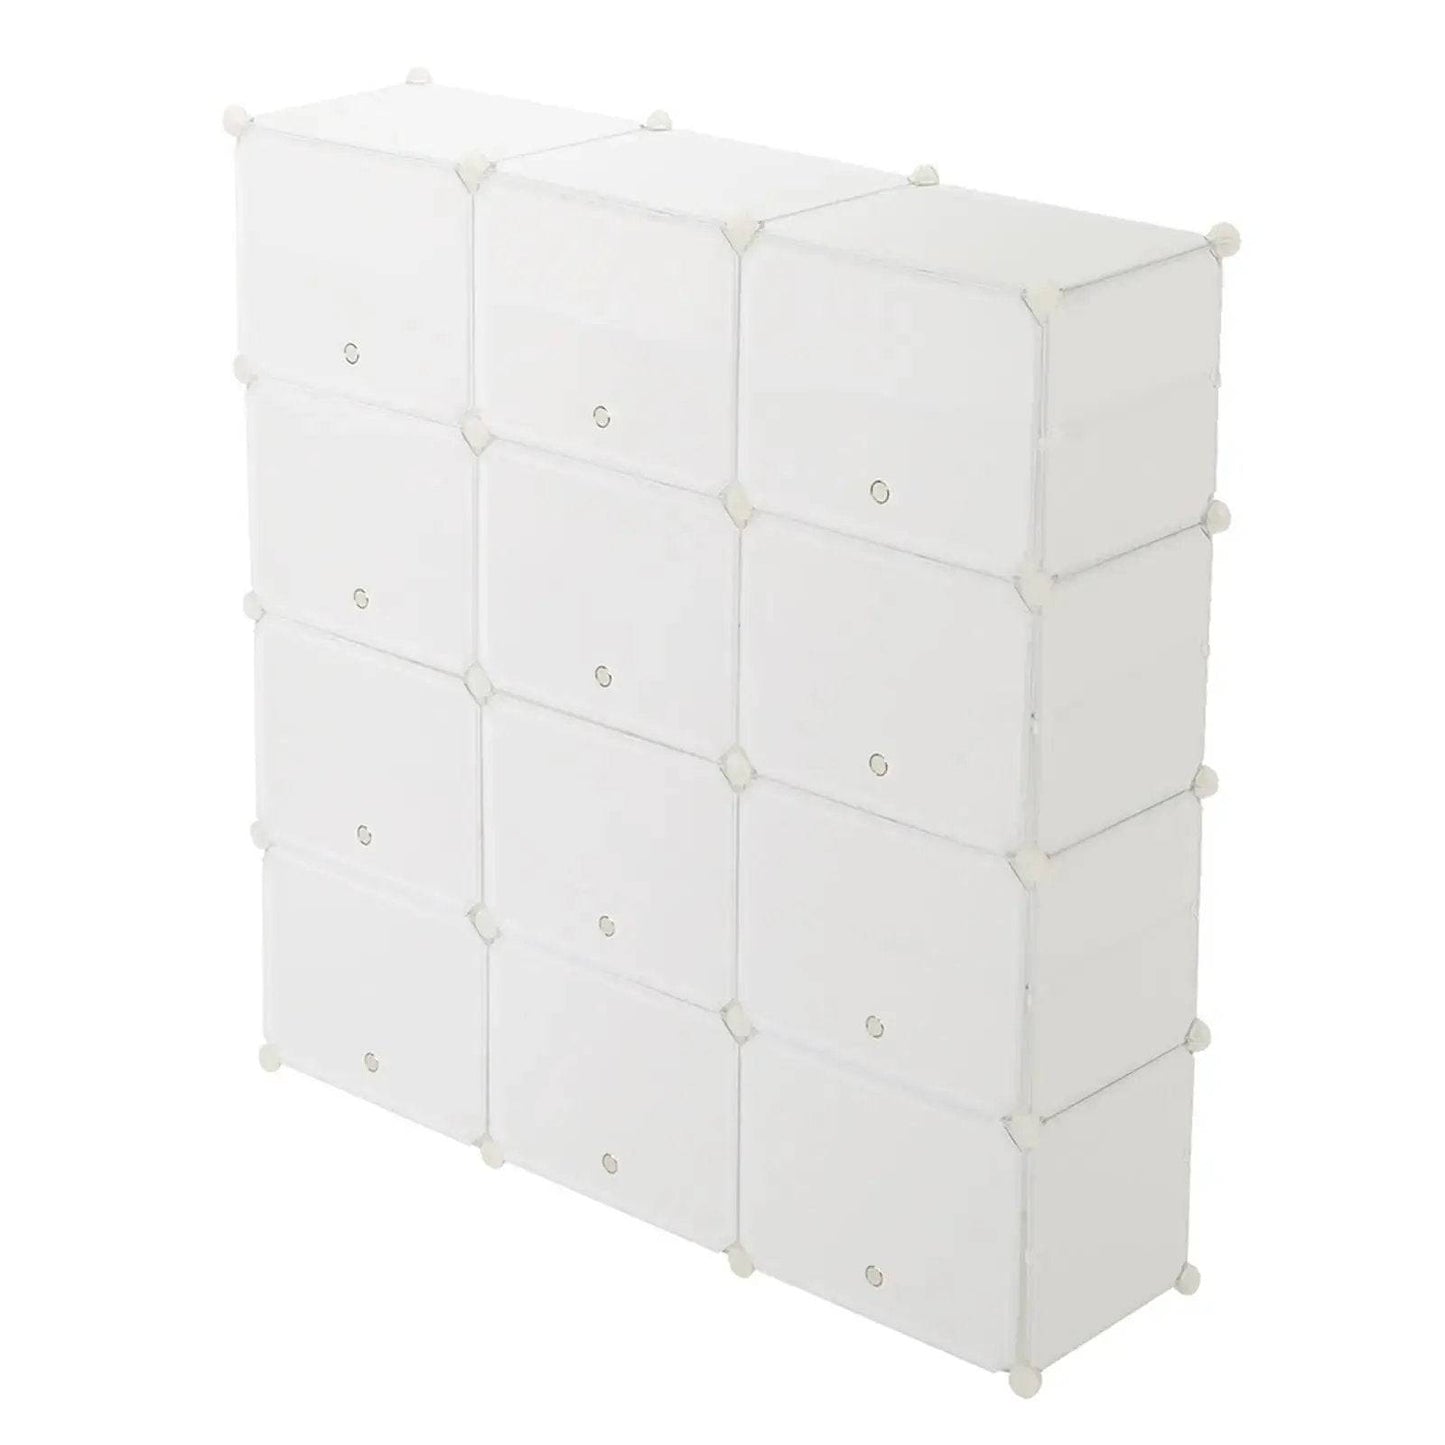 8-Tier Portable 48 Pair Shoe Rack Organizer 24 Grids Tower Shelf Storage Cabinet Stand, White